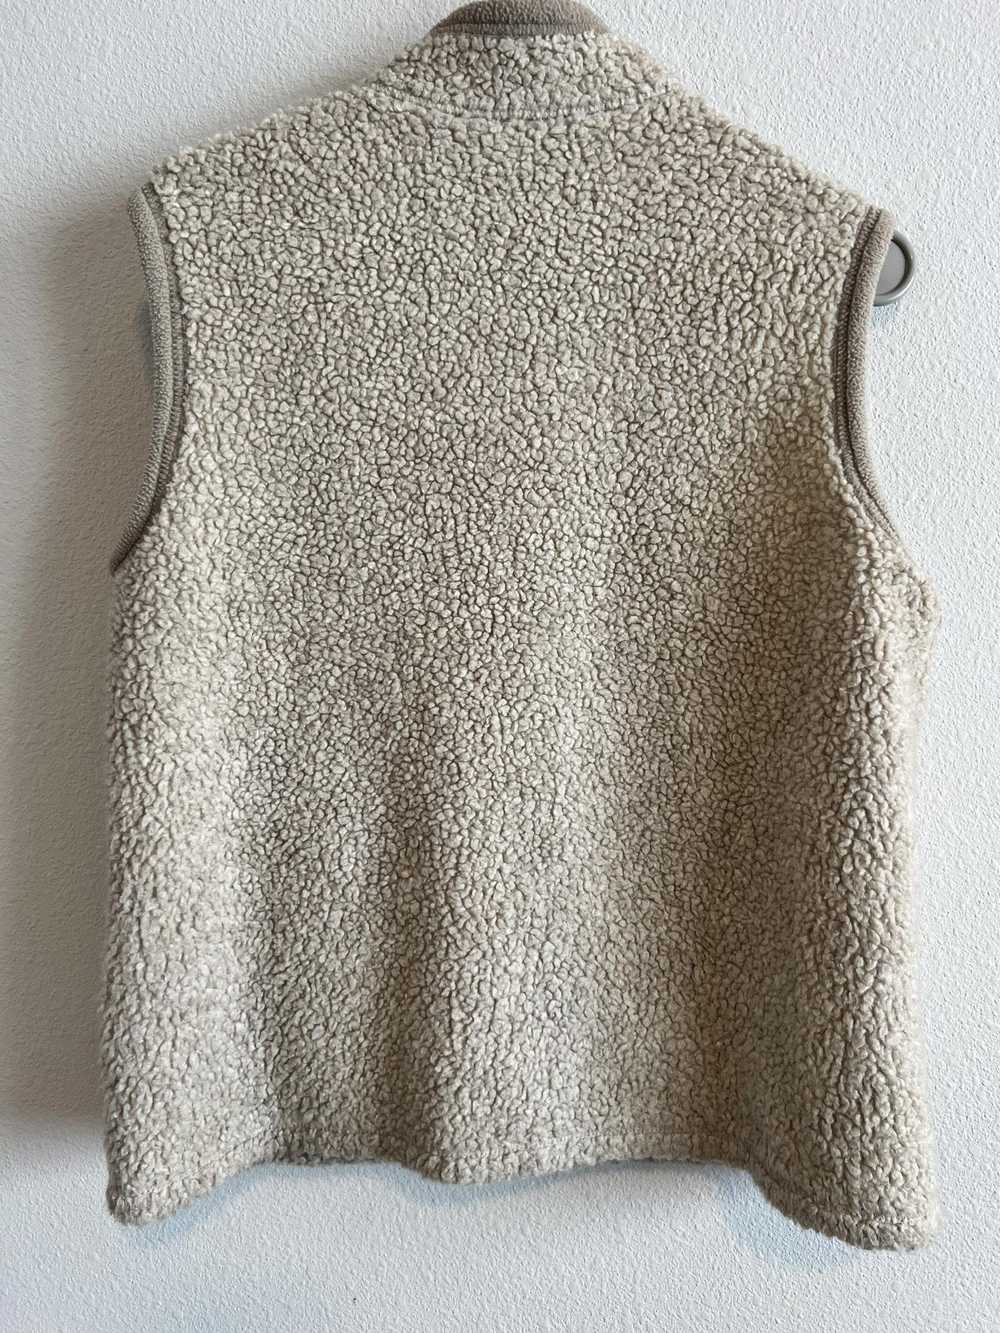 Woolrich Woolen Mills Woolrich Tan Outdoors Vest … - image 4